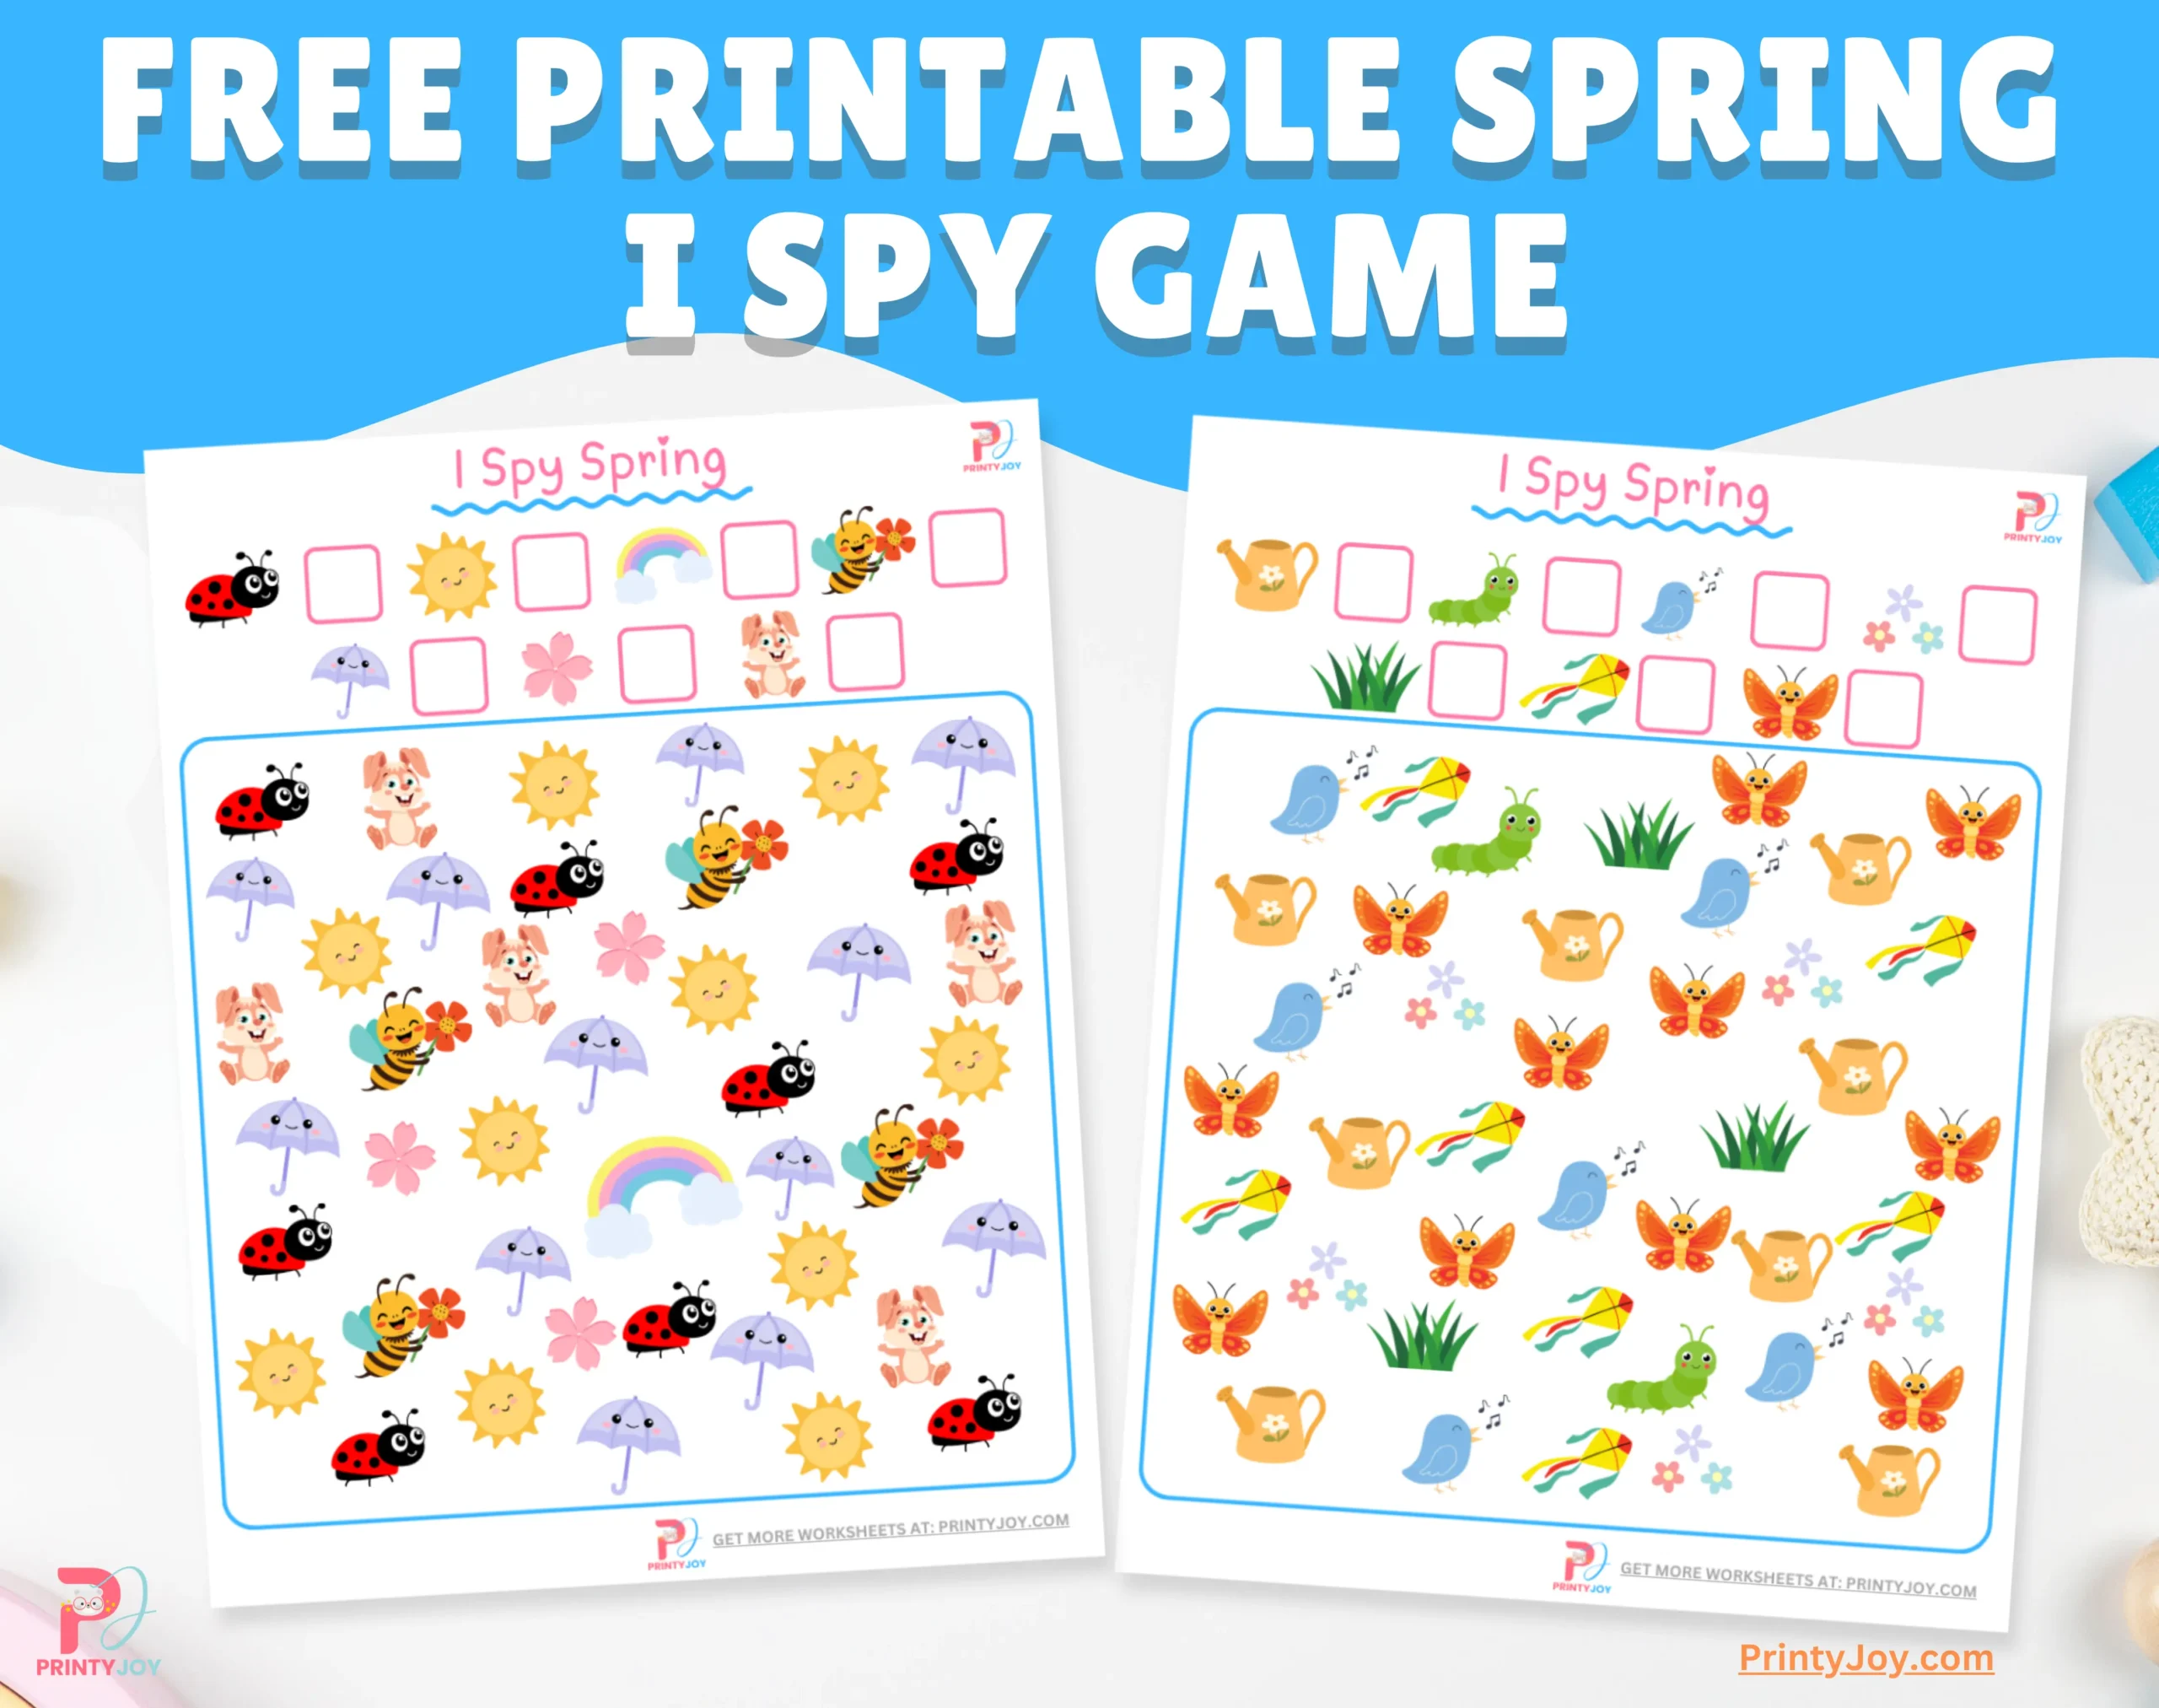 Free Printable Spring I Spy Game